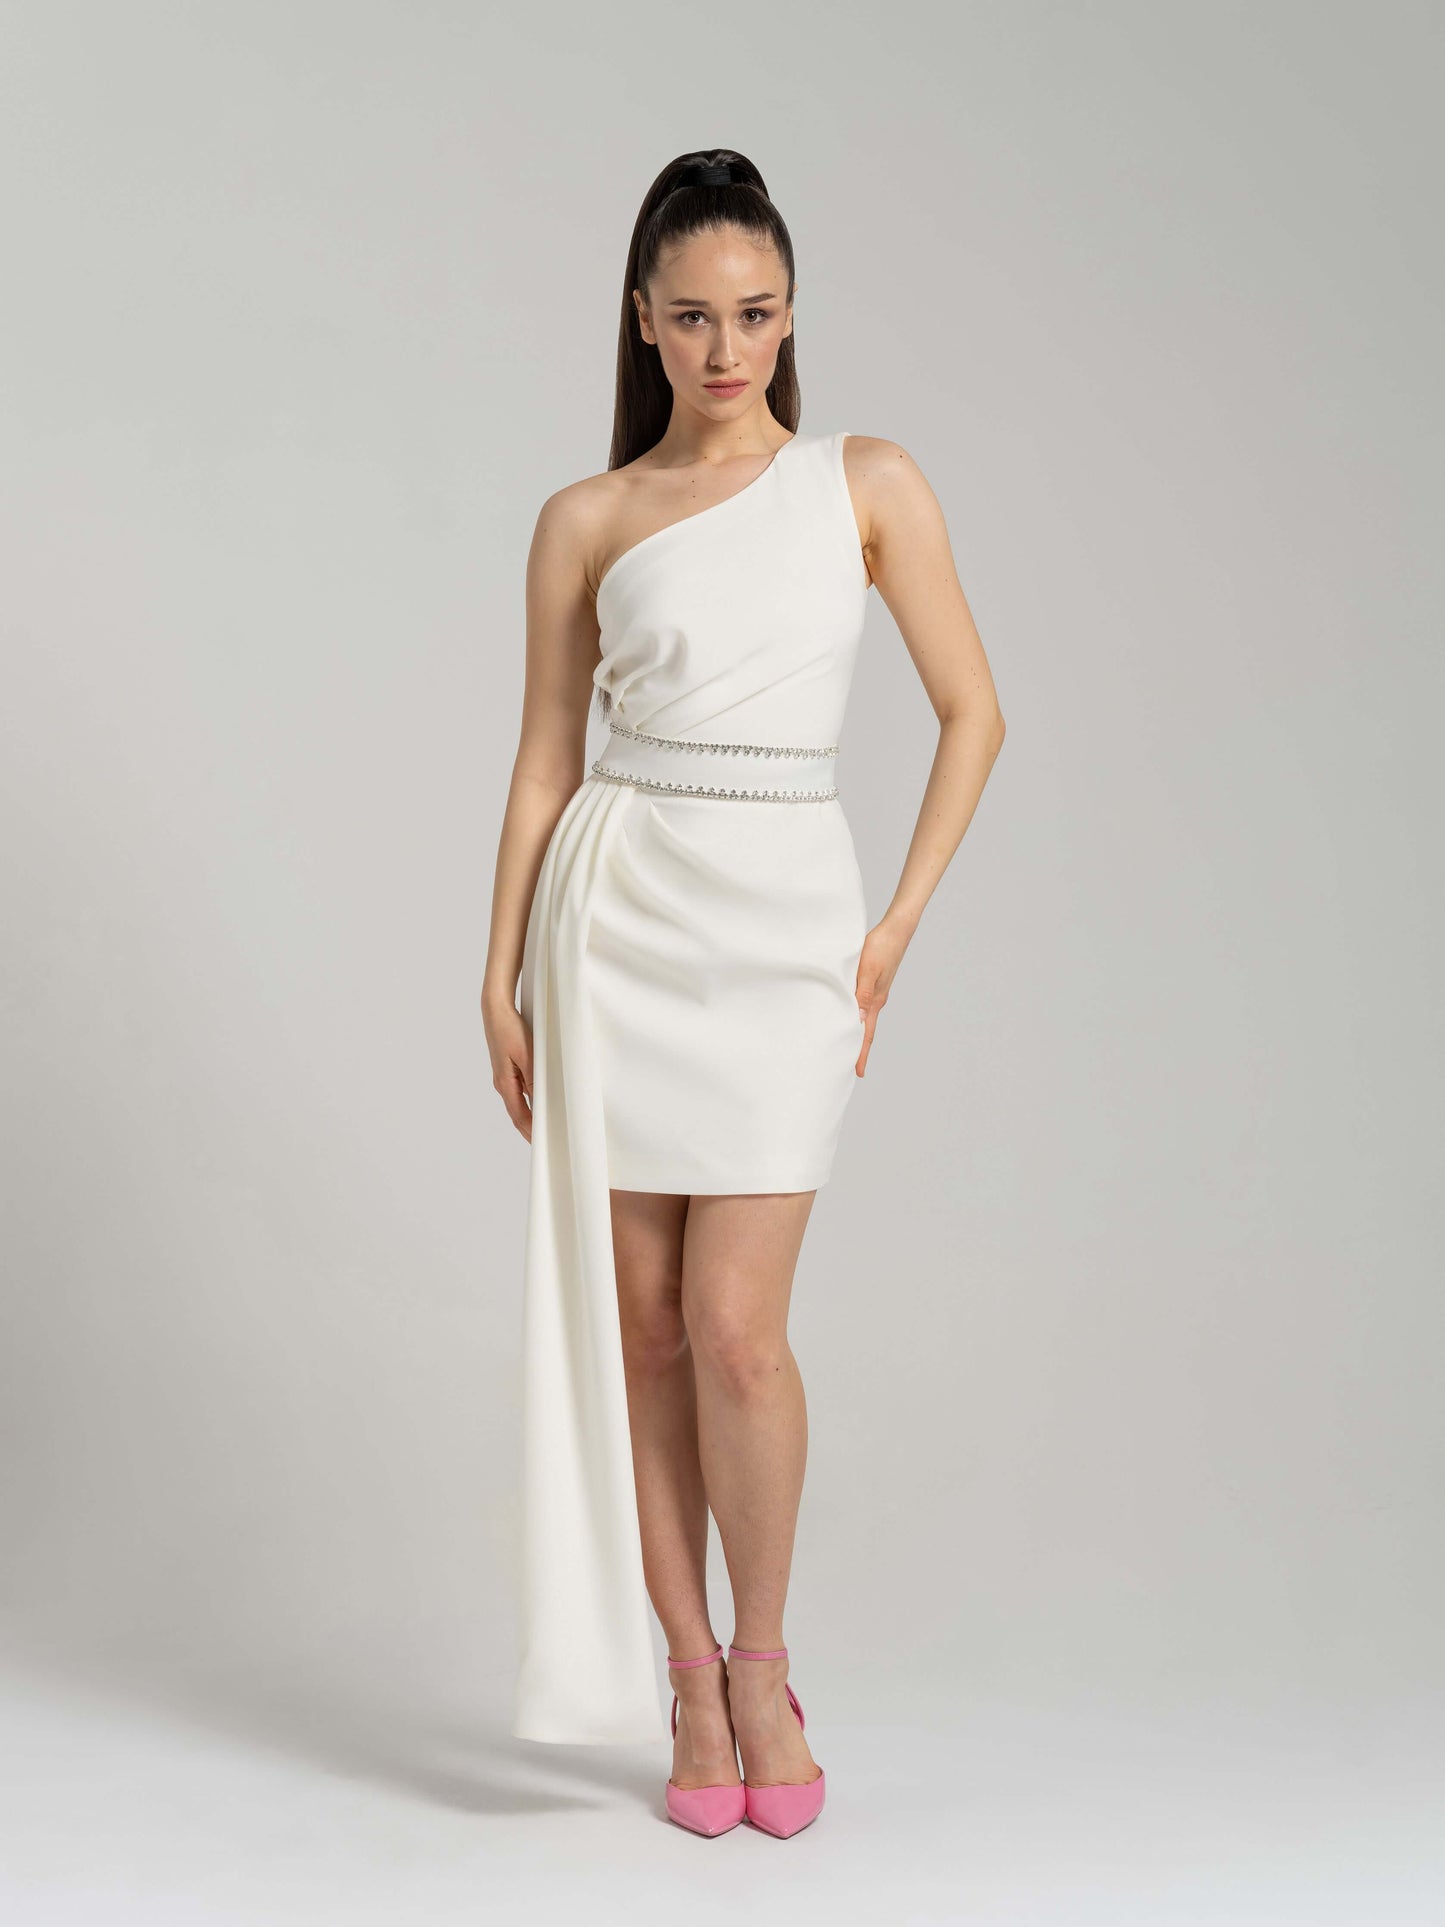 Iconic Glamour Crystal-Adorned Dress - White